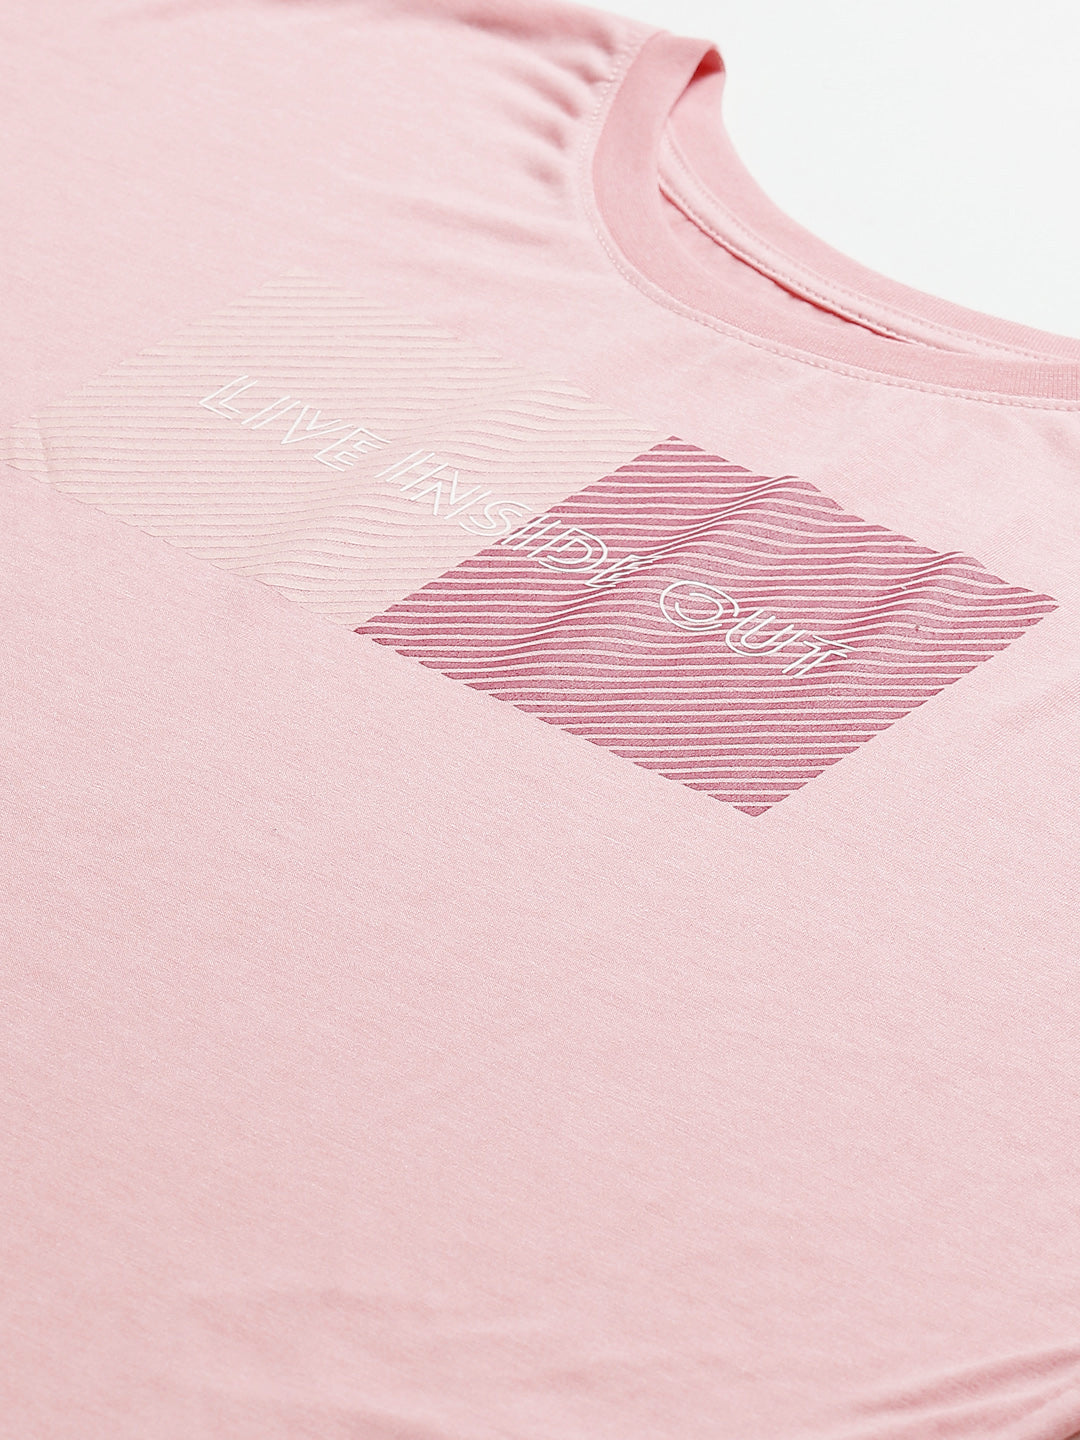 Alcis Women Pink Printed Slim Fit Round Neck T-shirt